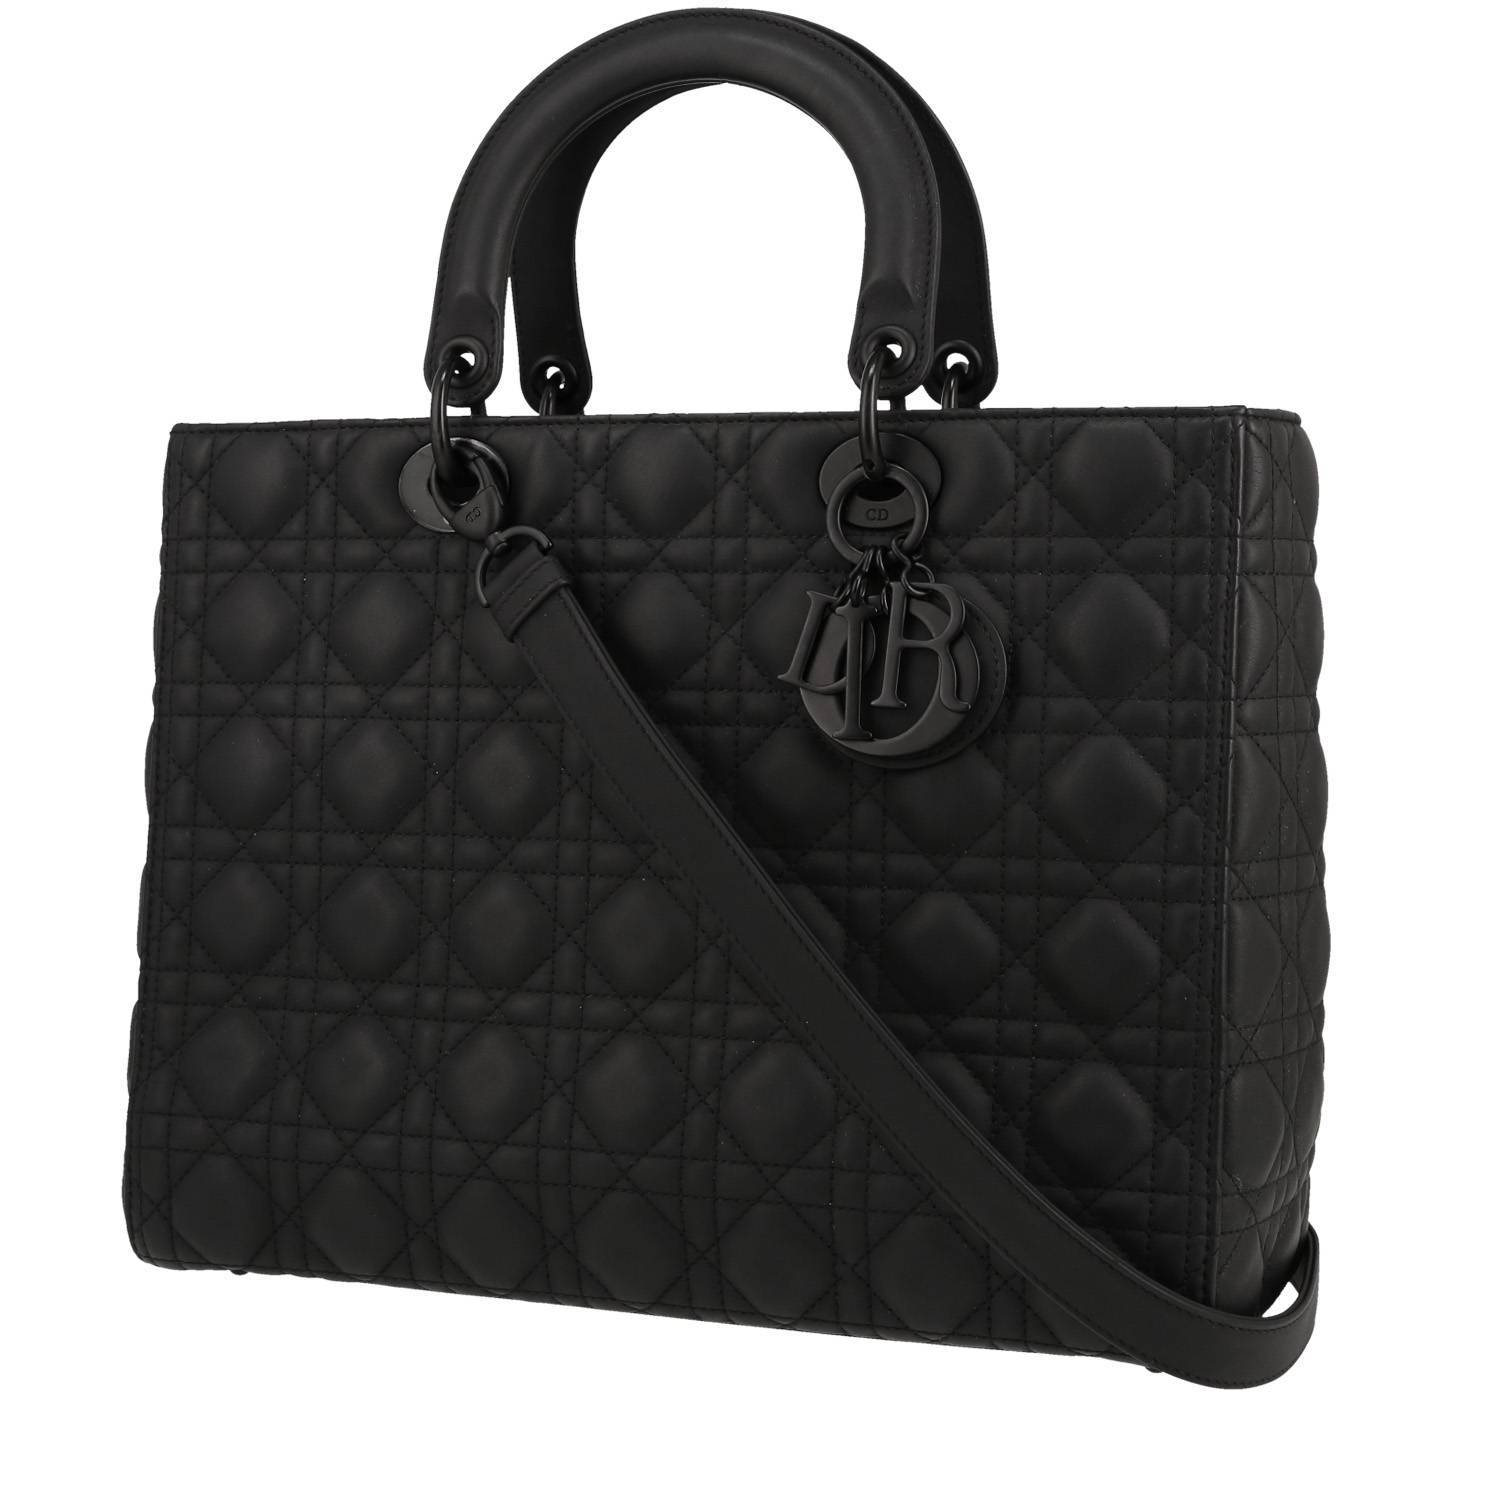 Lady Dior Large Model Handbag In Black Leather Cannage